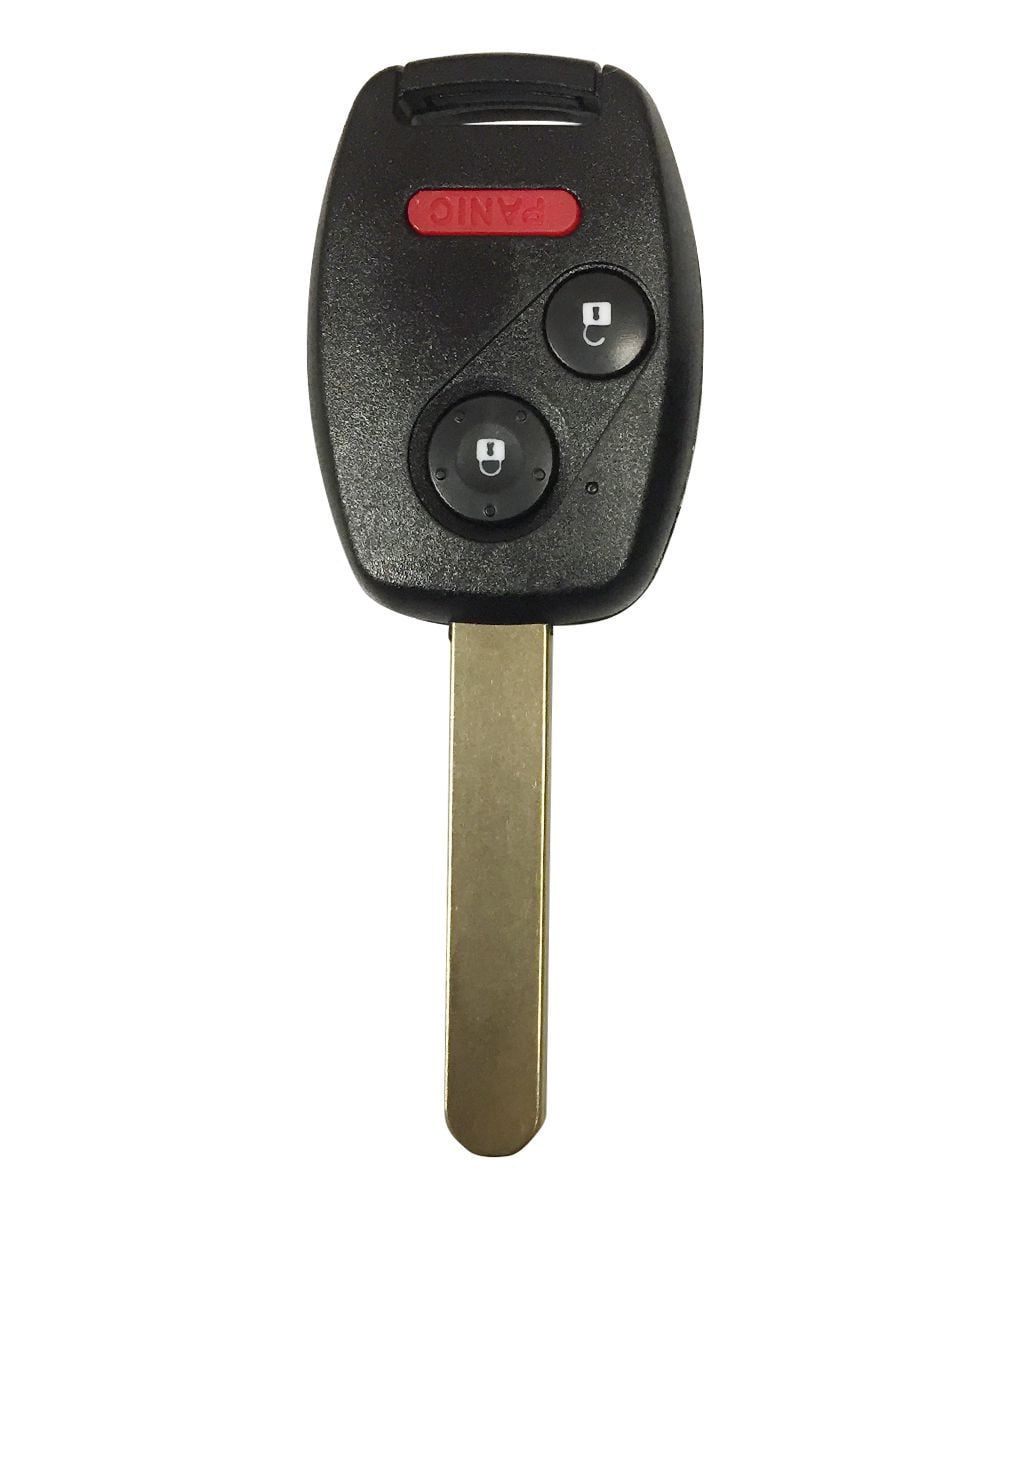 2011-2014 Odyssey Key Fob Keyless Entry Remote fits 2006-2011 Honda Civic LX N5F-S0084A 